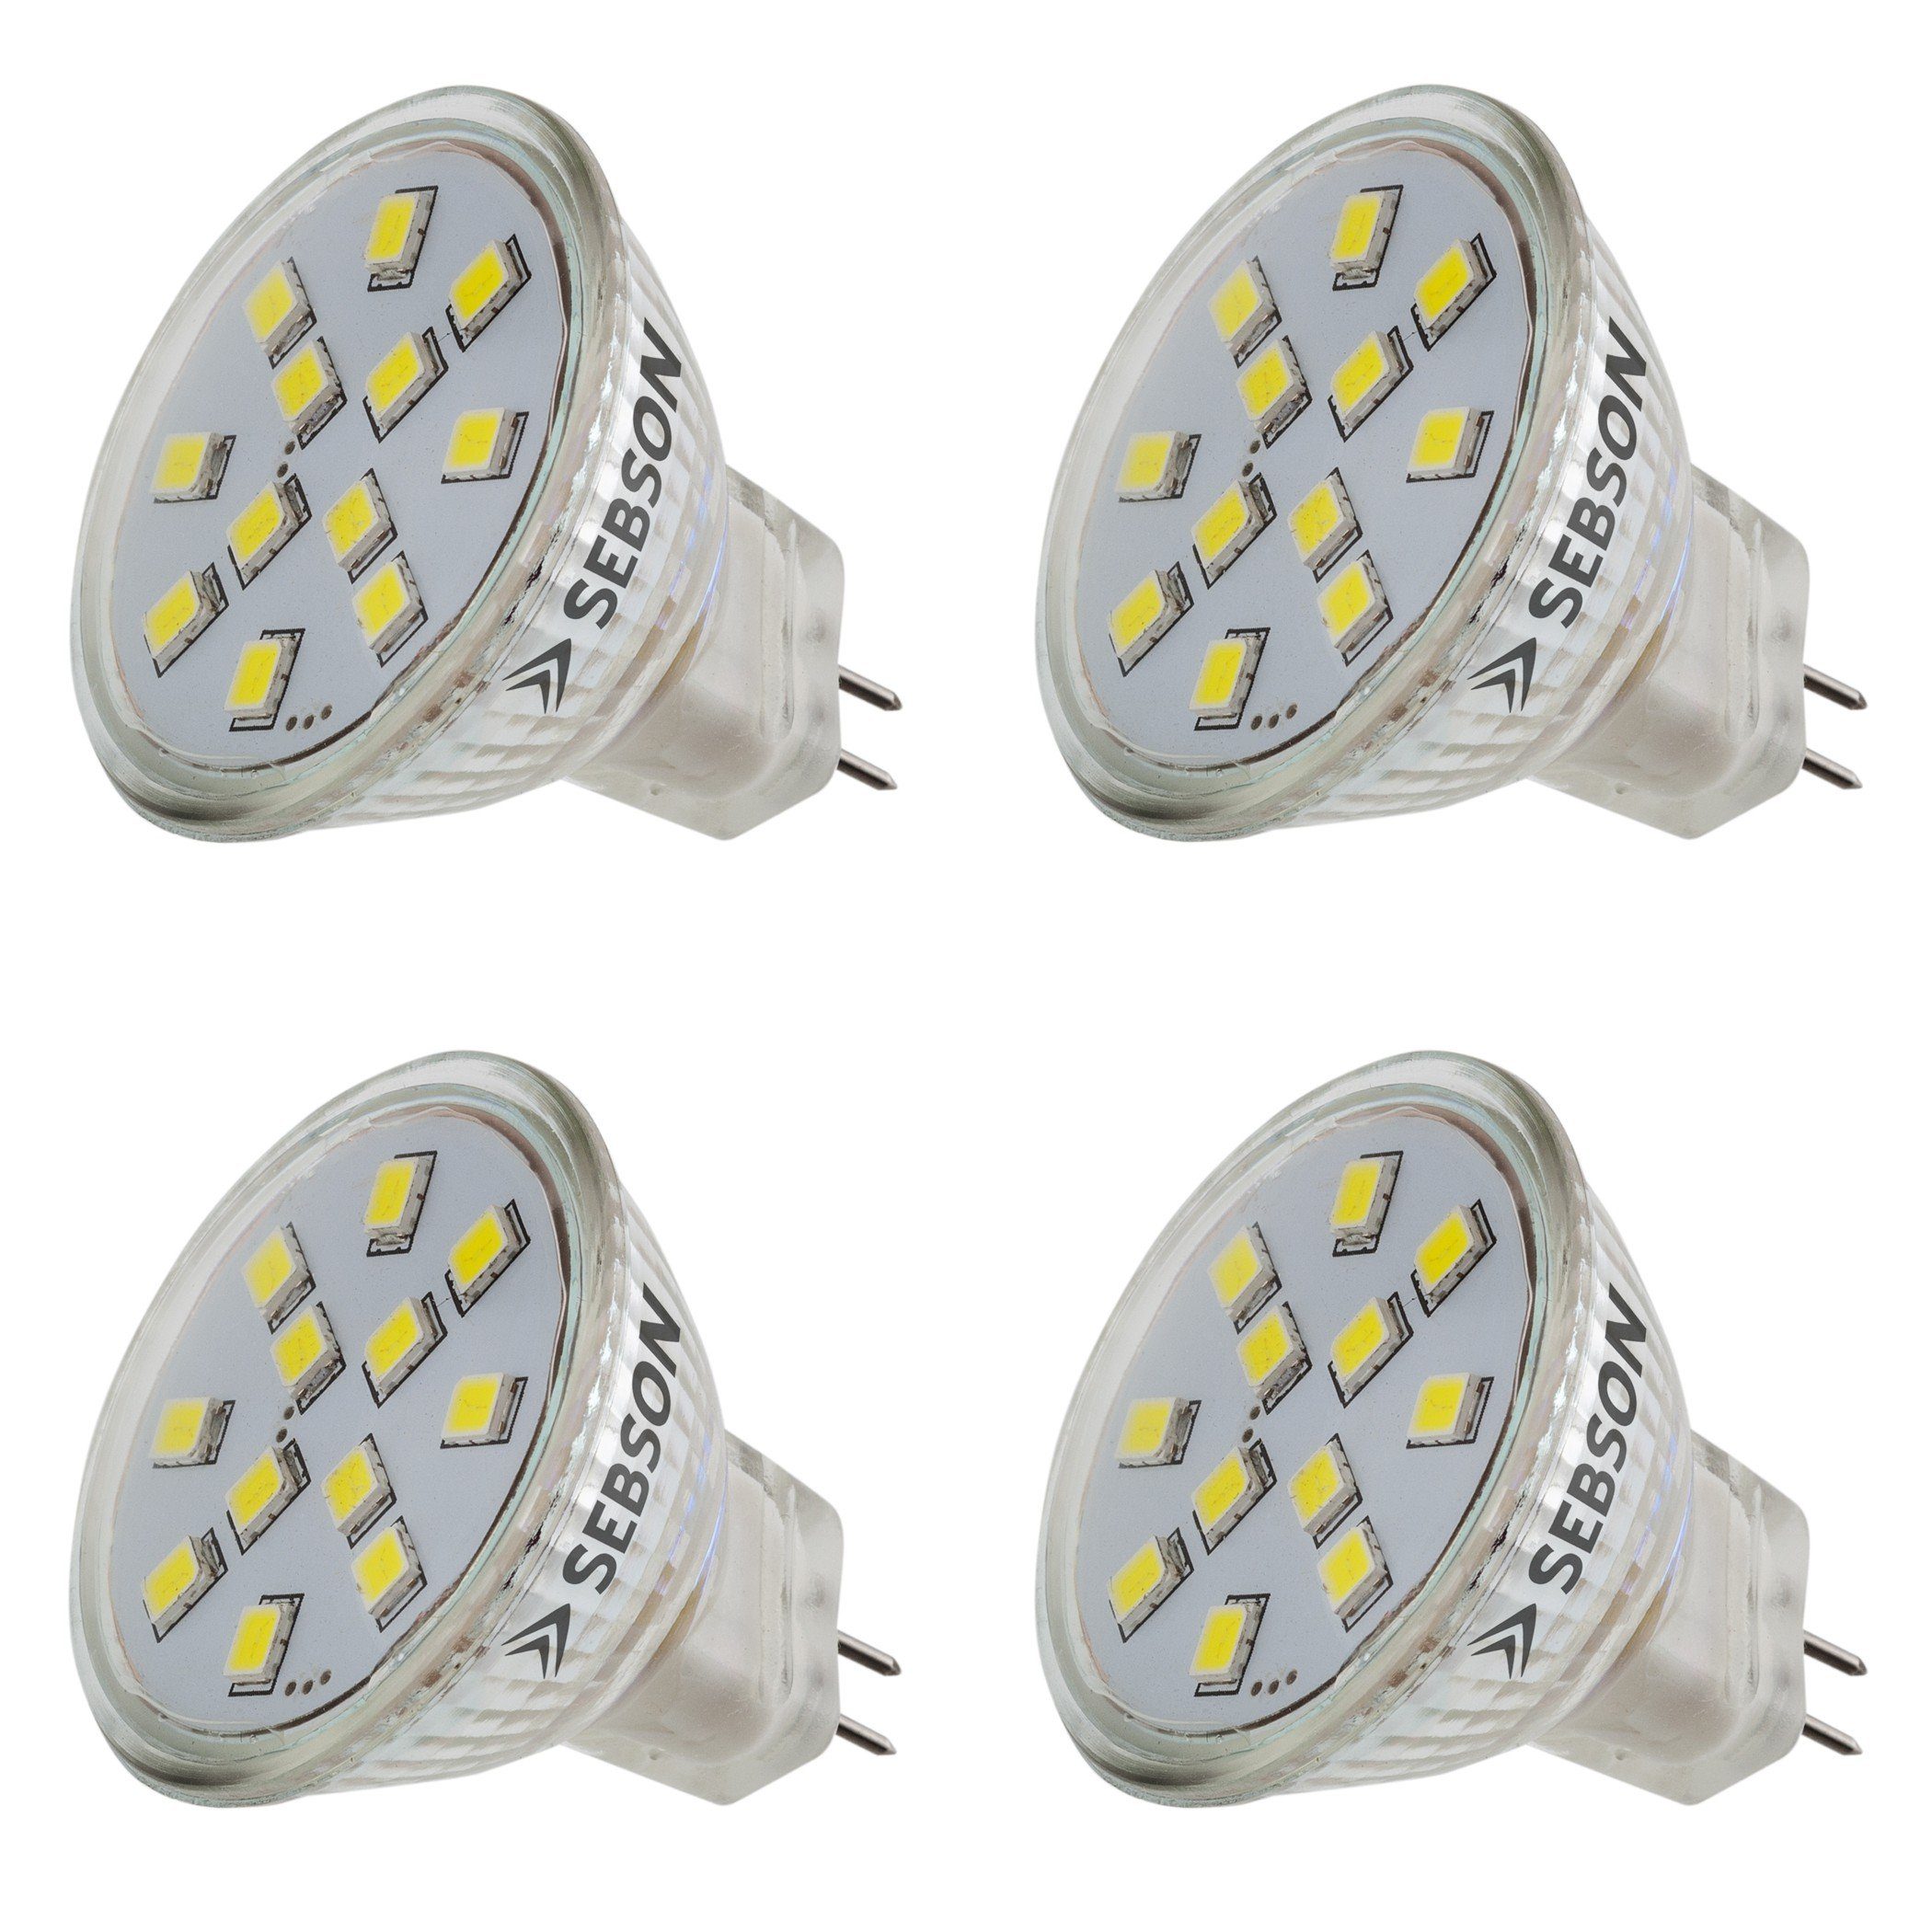 SEBSON LED Lampe GU4/ MR11 2W (1.6W) warmweiß 150lm, Leuchtmittel 110°, 12V  DC, 4er Pack LED-Leuchtmittel